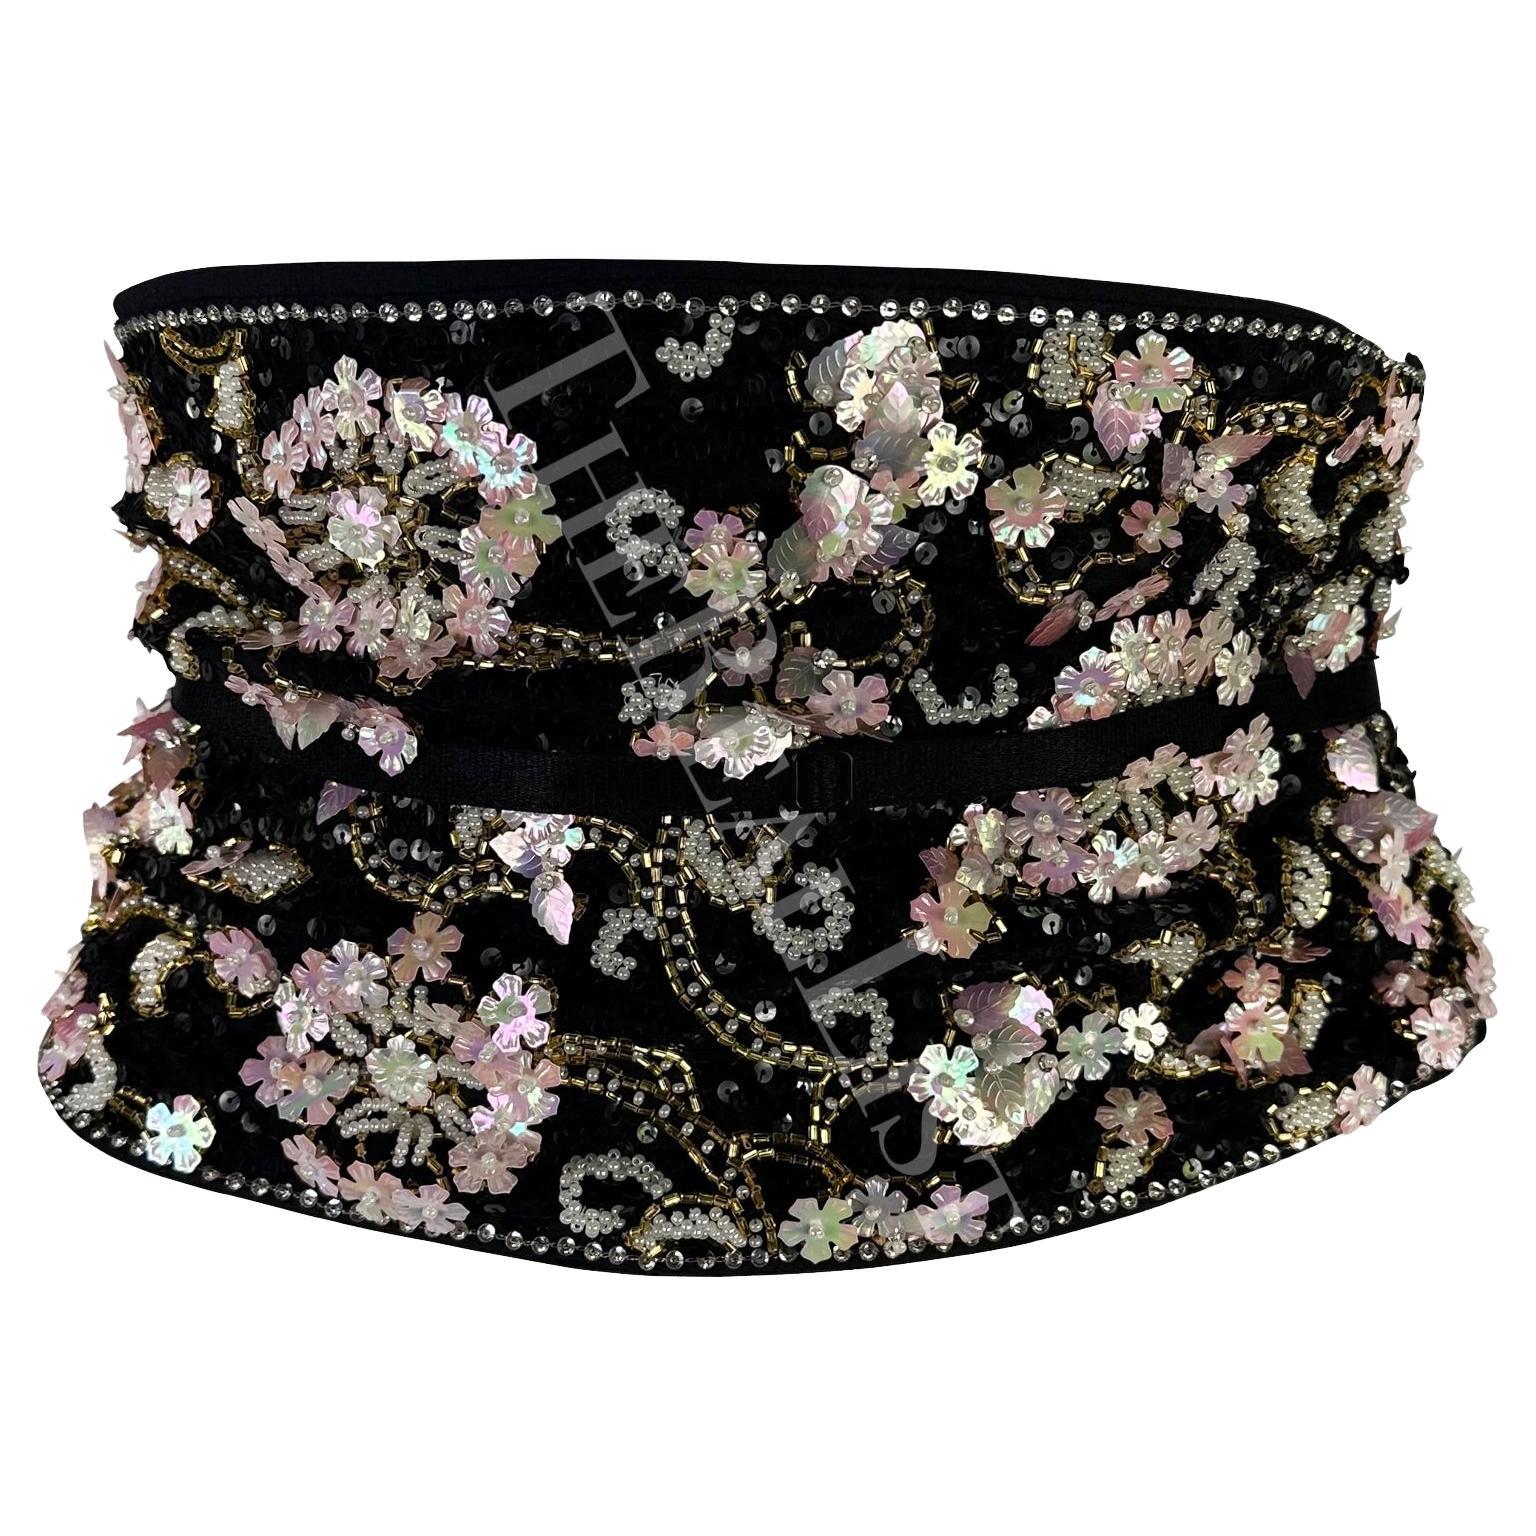 S/S 1999 Dolce & Gabbana Runway Floral Beaded Corset Boned Obi Wrap Waist Belt